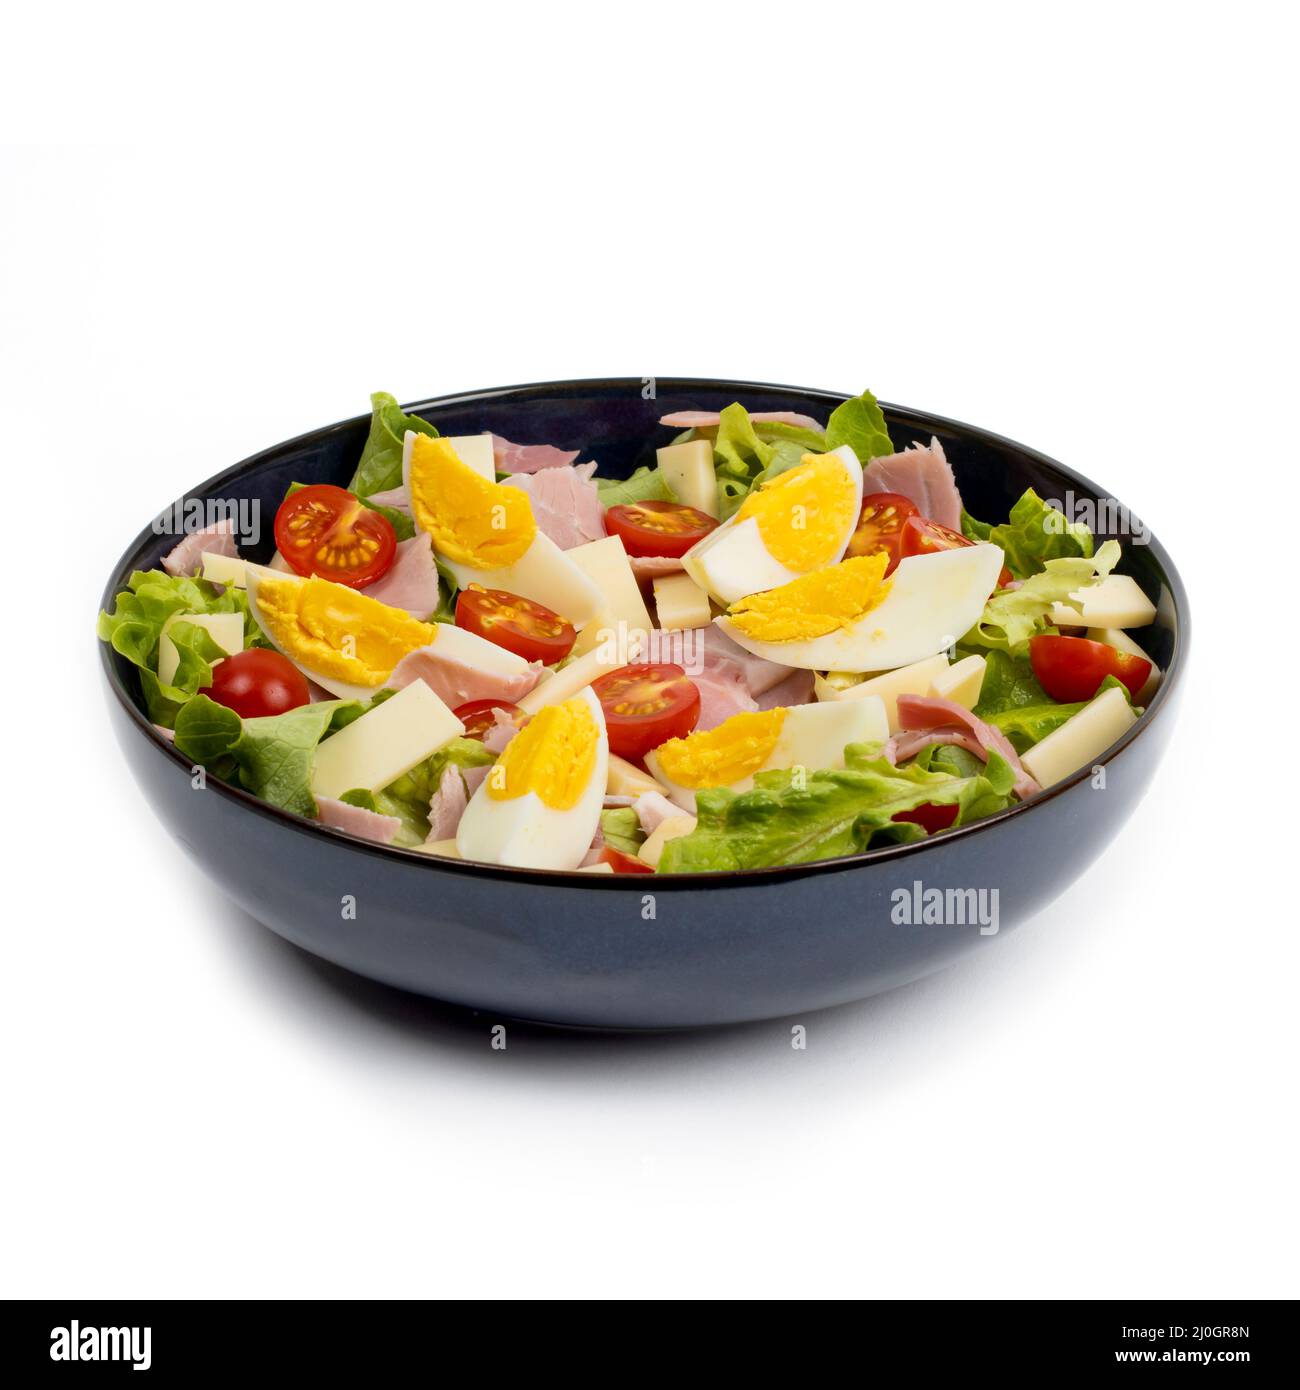 Parisian Salad - salad, ham, cheese, tomatoes, egg - studio photography Stock Photo